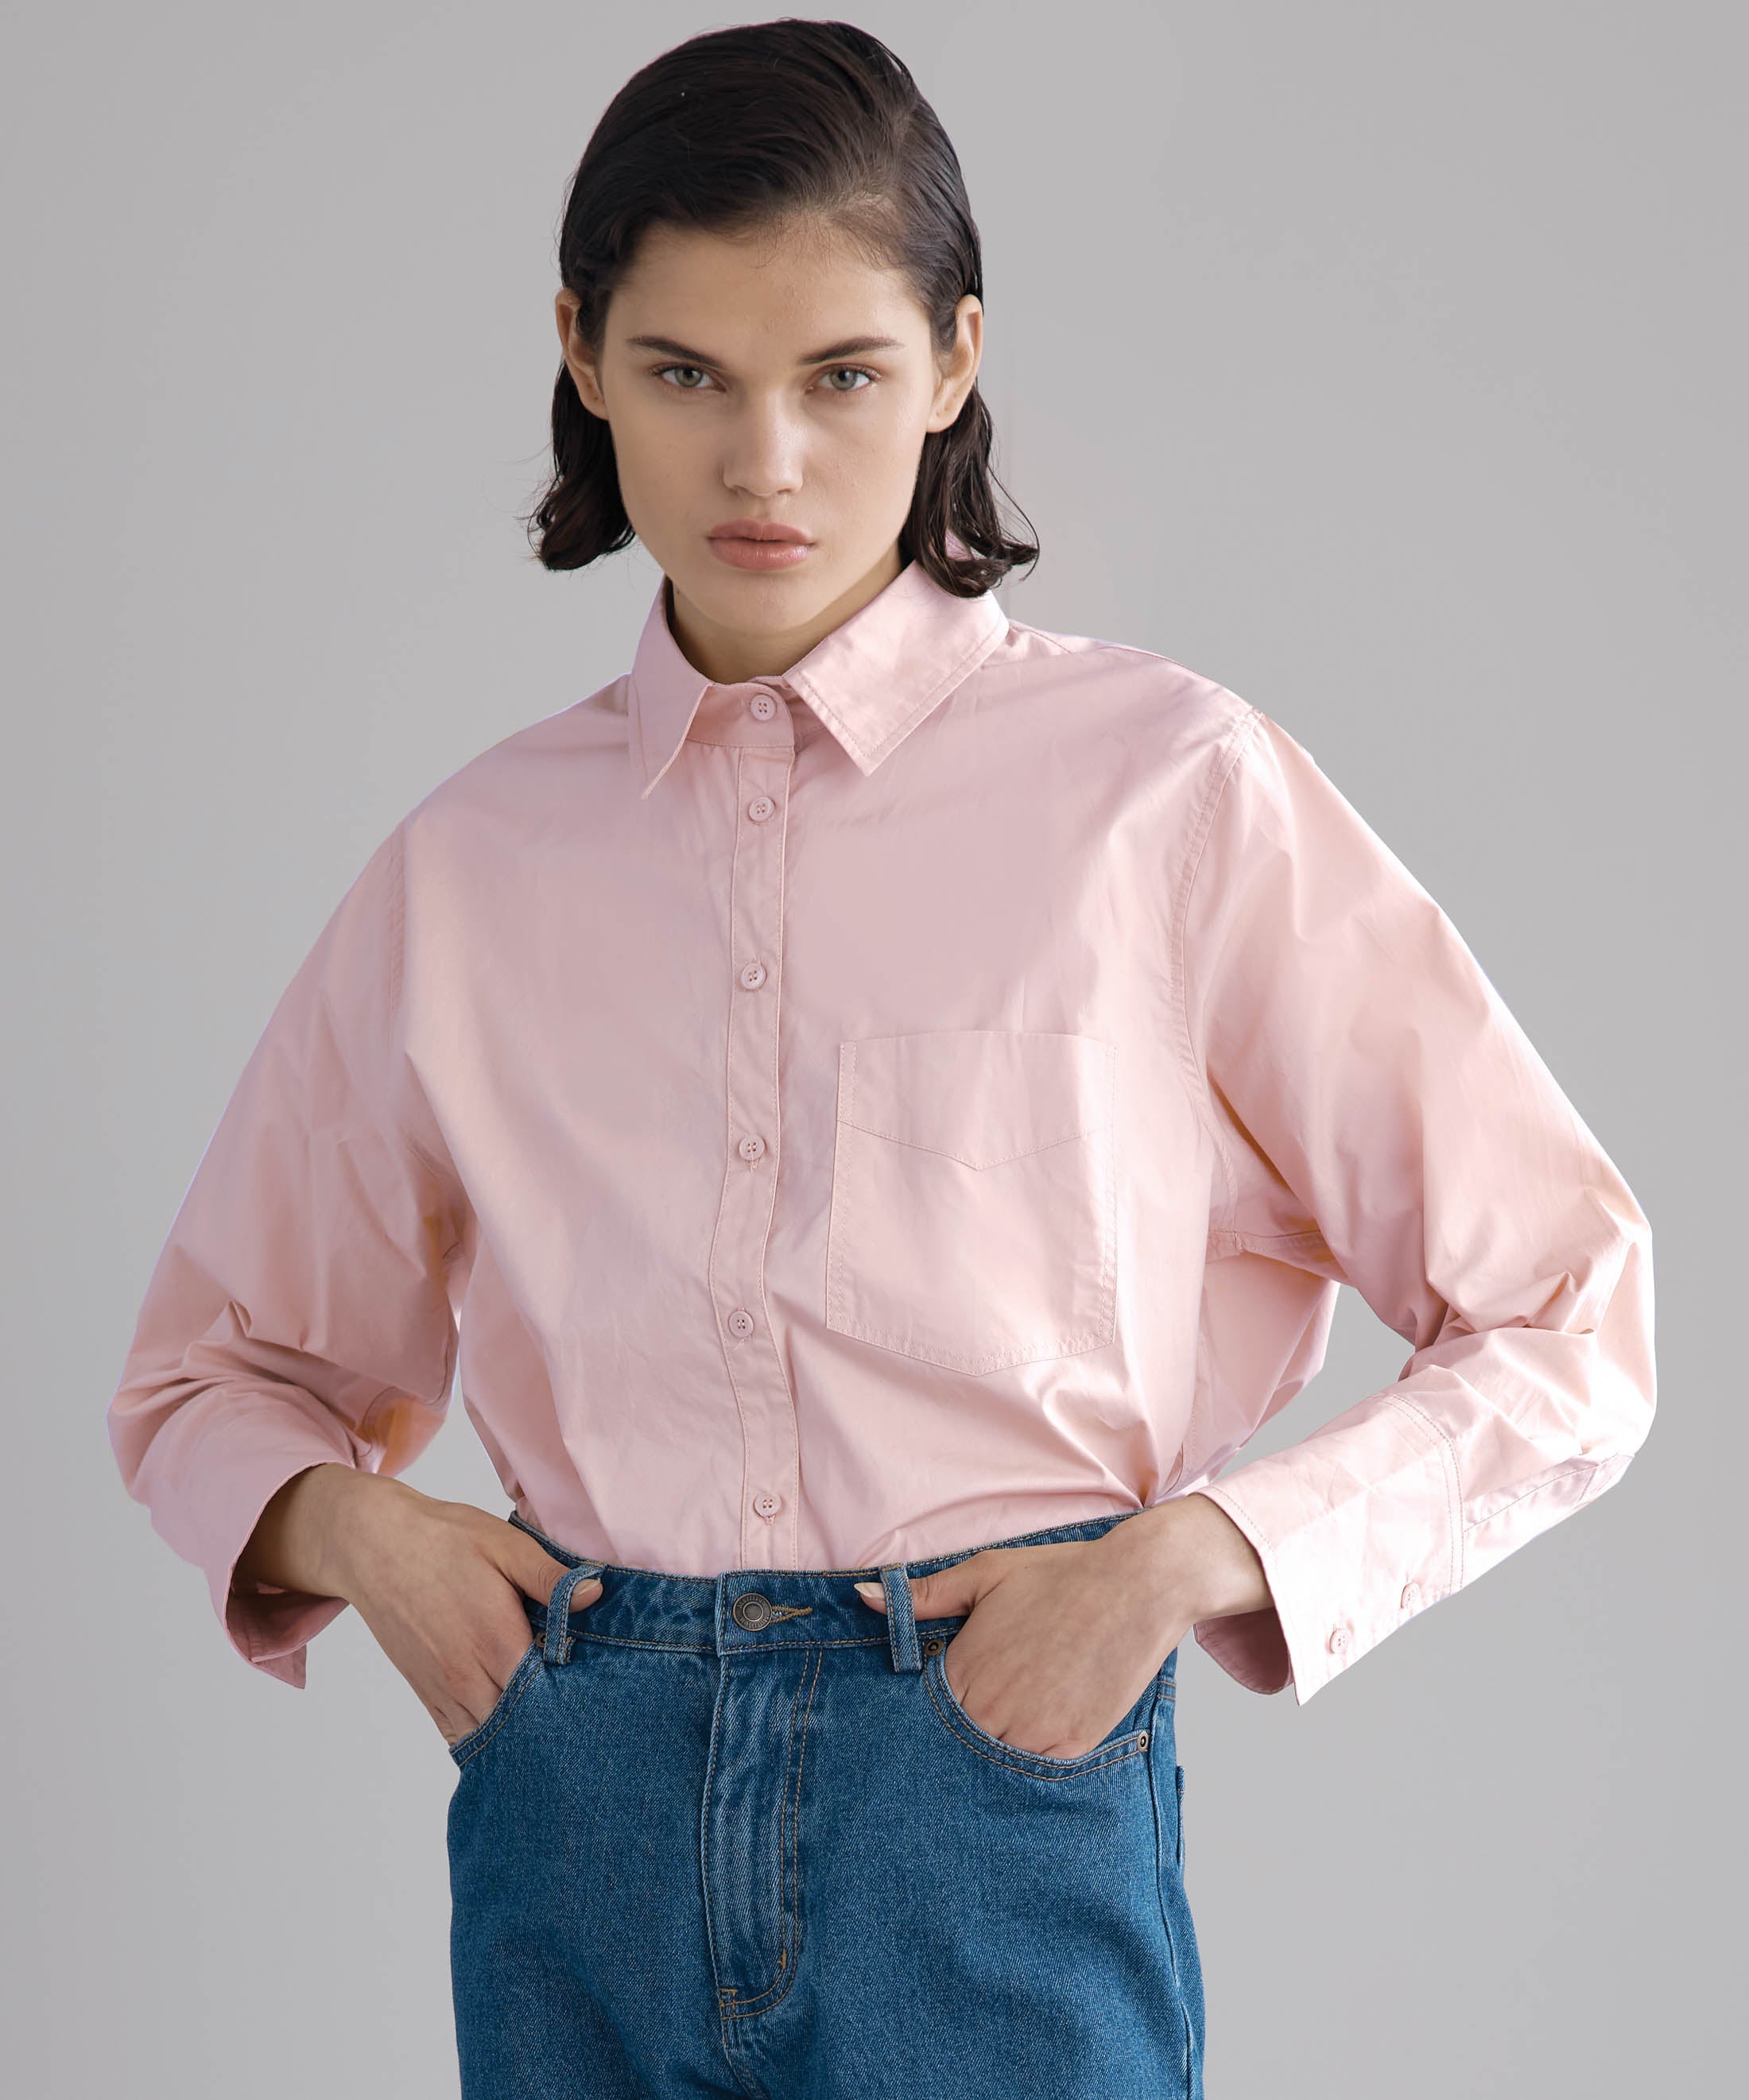 Morrison | Pippie Shirt - Pink